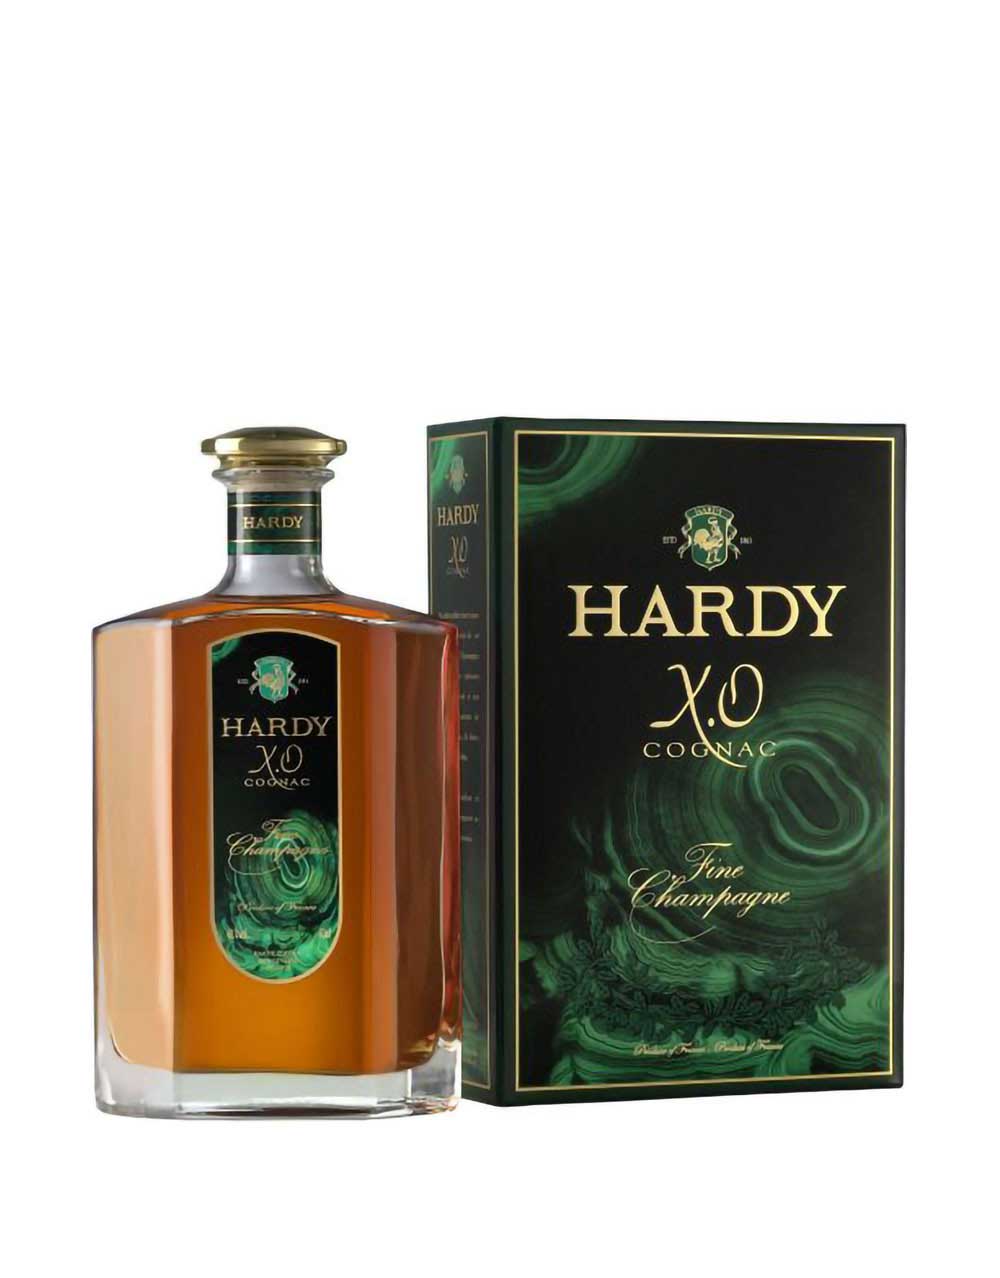 Hardy XO Bronze Decanter Fine Champagne Cognac